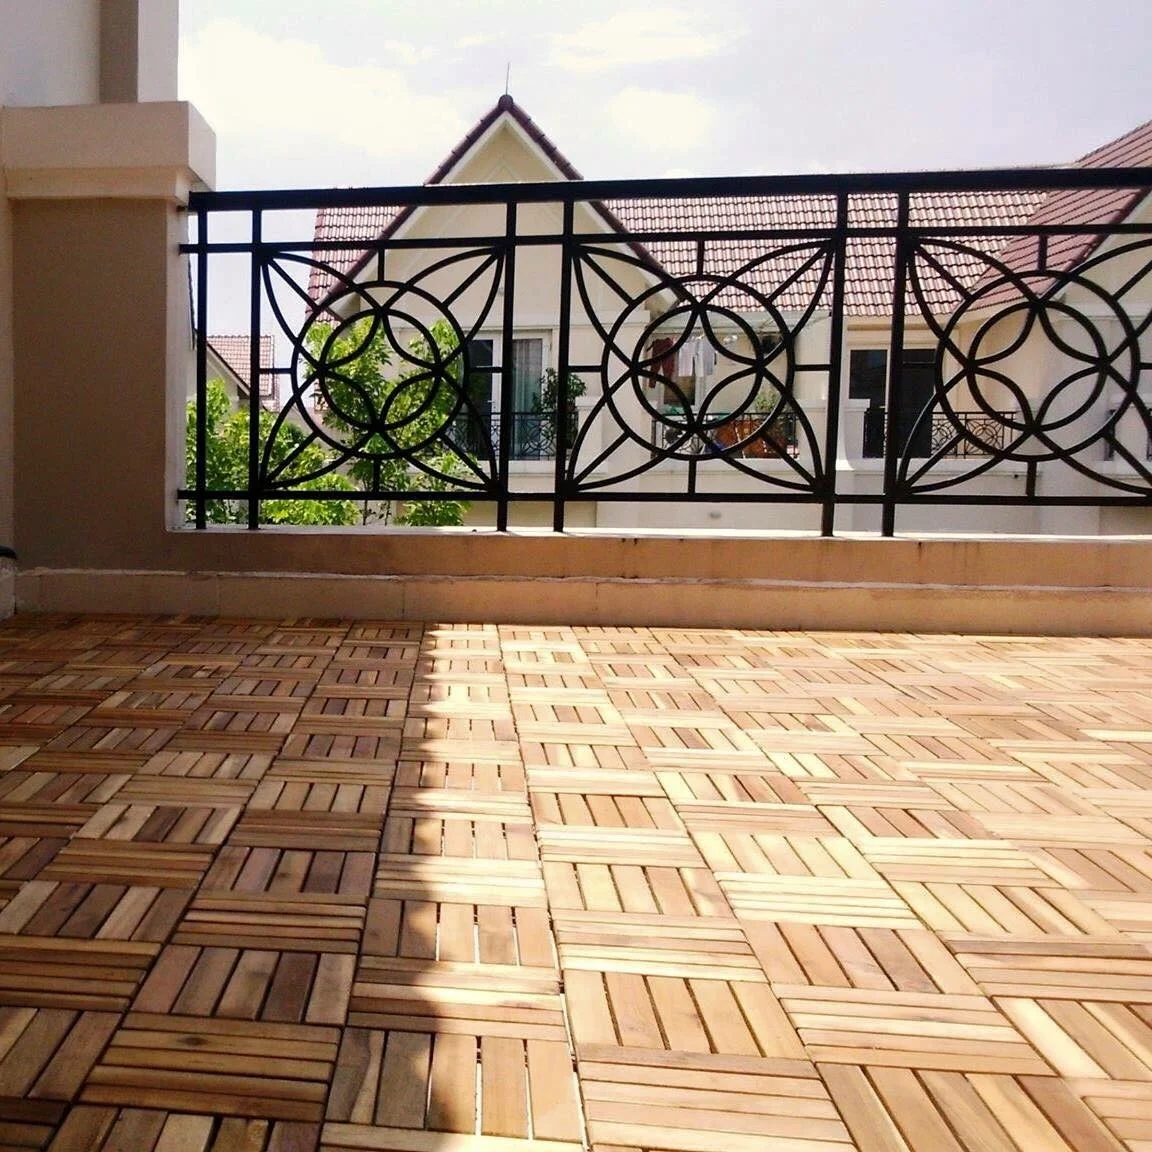 
Acacia Wood Interlocking Deck Tiles, Plastic wood composite interlock deck tile or Plastic Decking Flooring Tiles B5982 